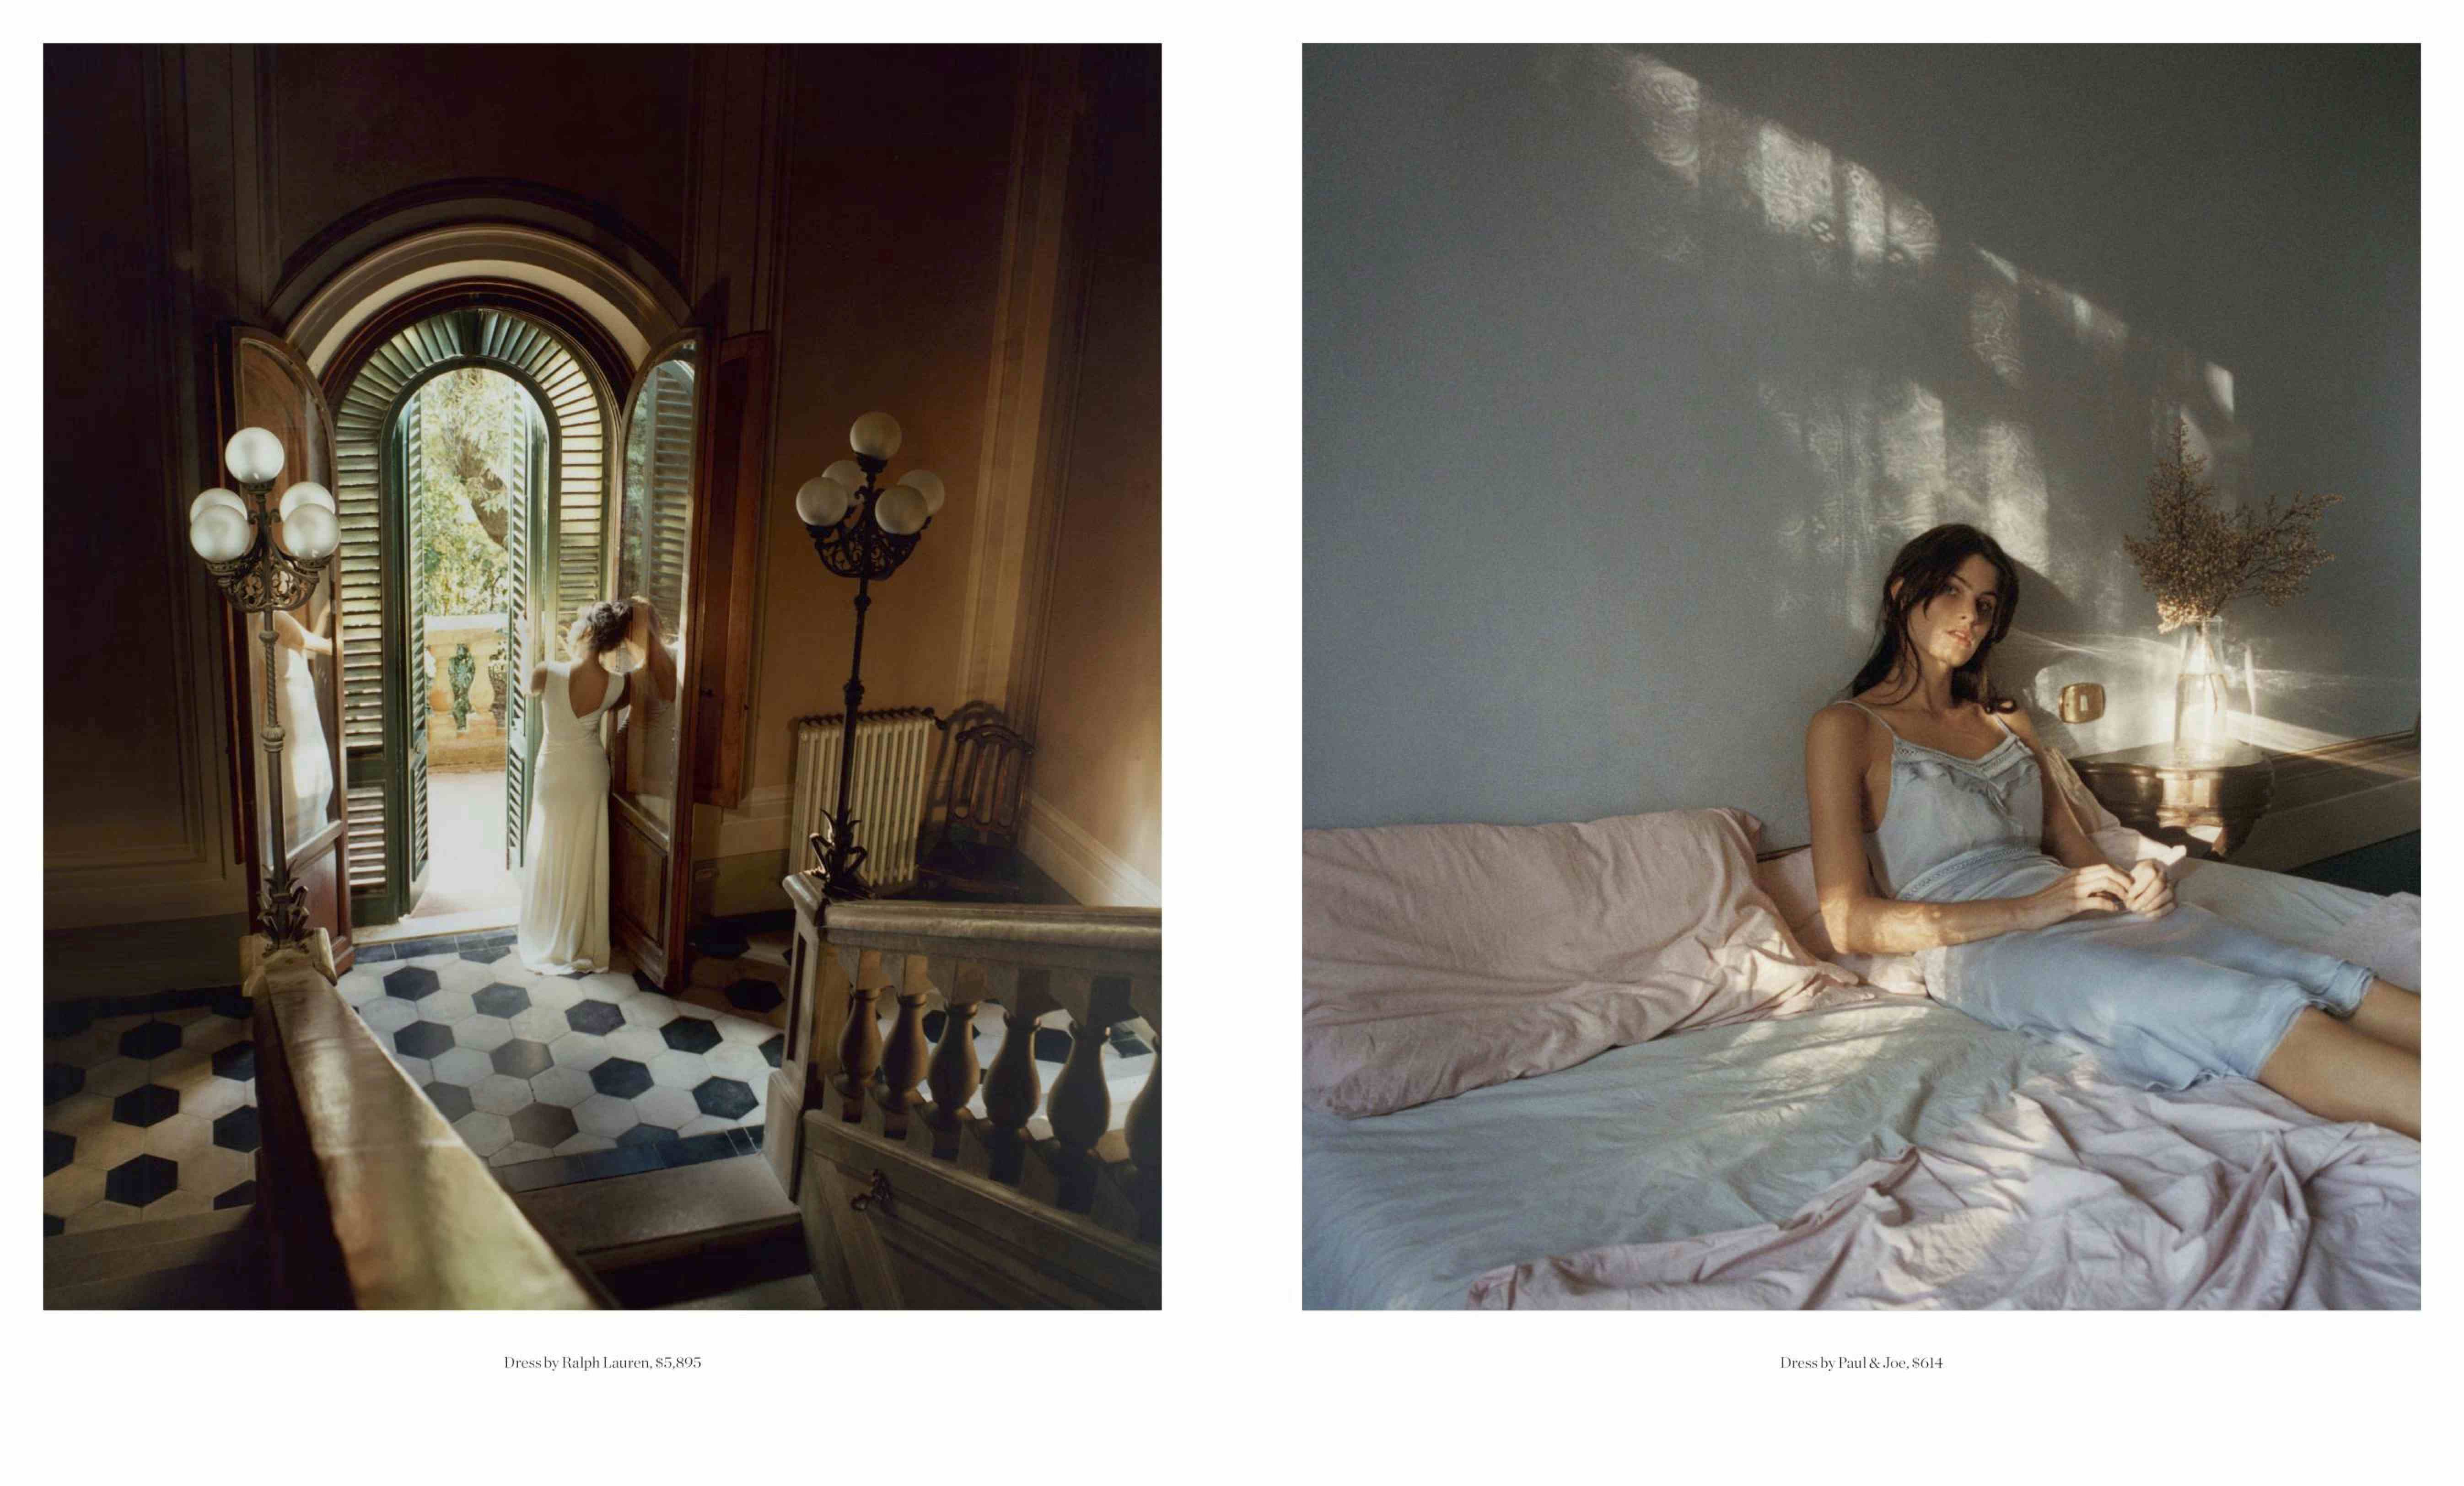 PORTER MAGAZINE - 2015
Photographer: Tom Craig
Model: Isabeli Fontana
Stylist: Cathy Kasterine
Location: Villa Lena - Italy